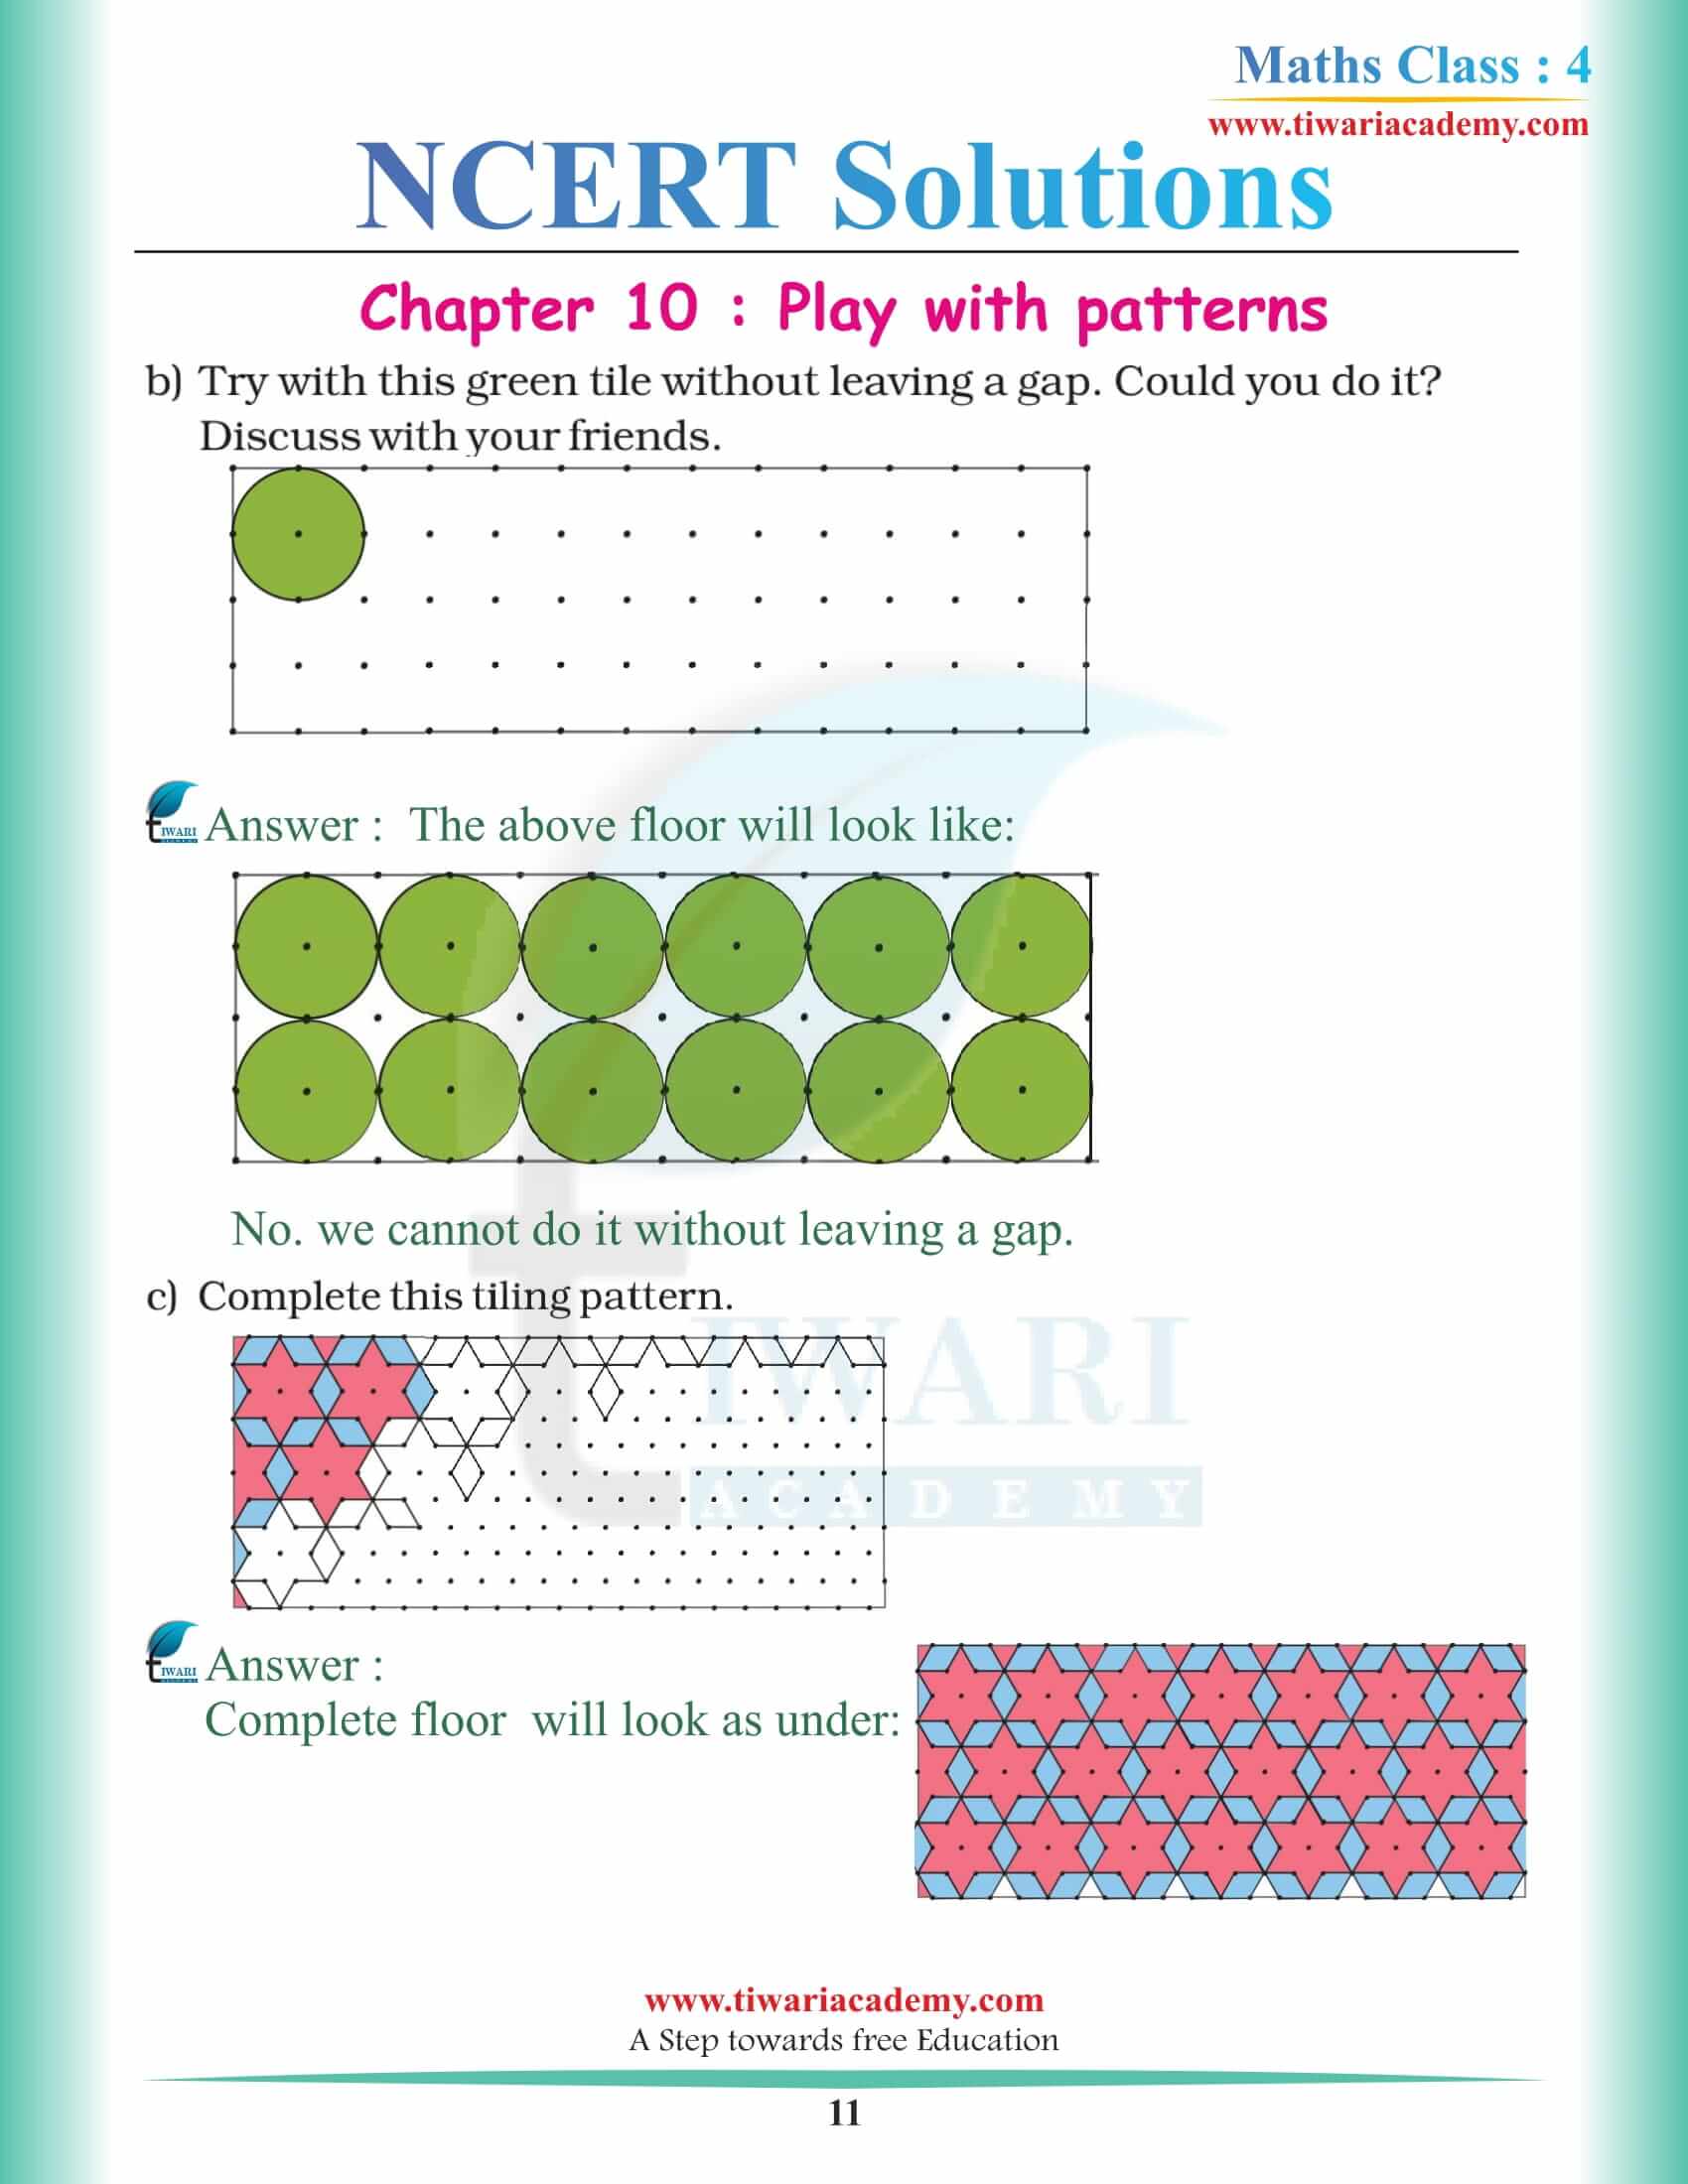 Class 4 Maths NCERT Chapter 10 Solutions free download